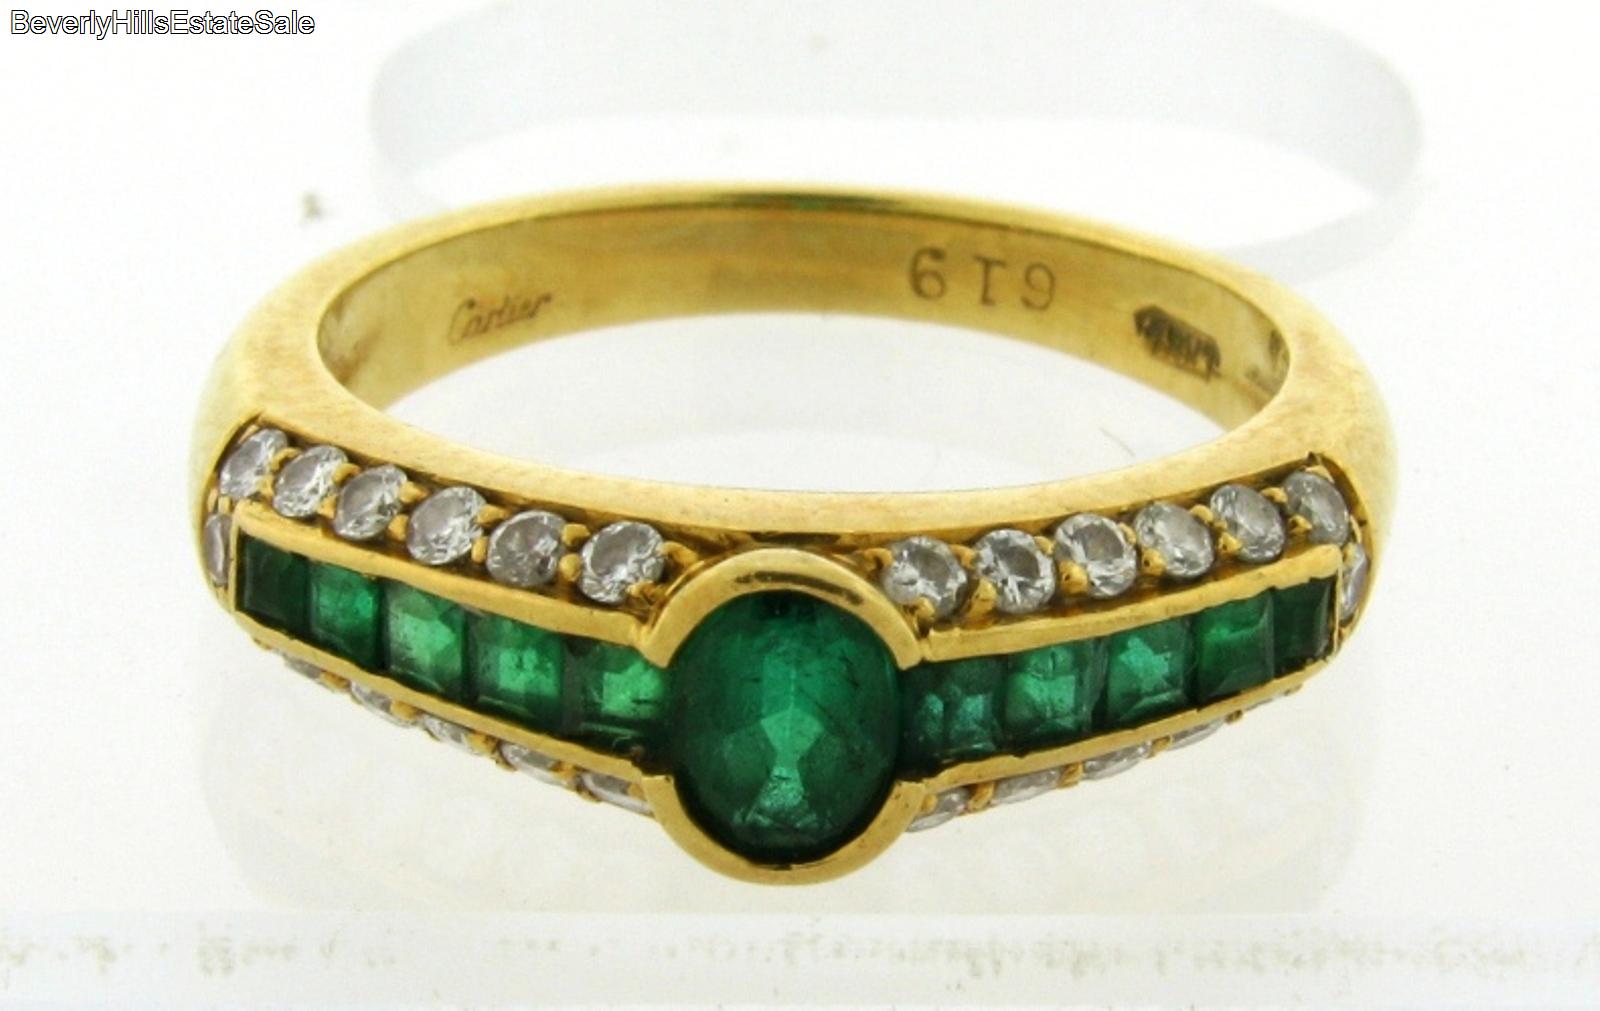 Vintage Cartier Emerald Diamond 18k Yellow Gold Ring | eBay